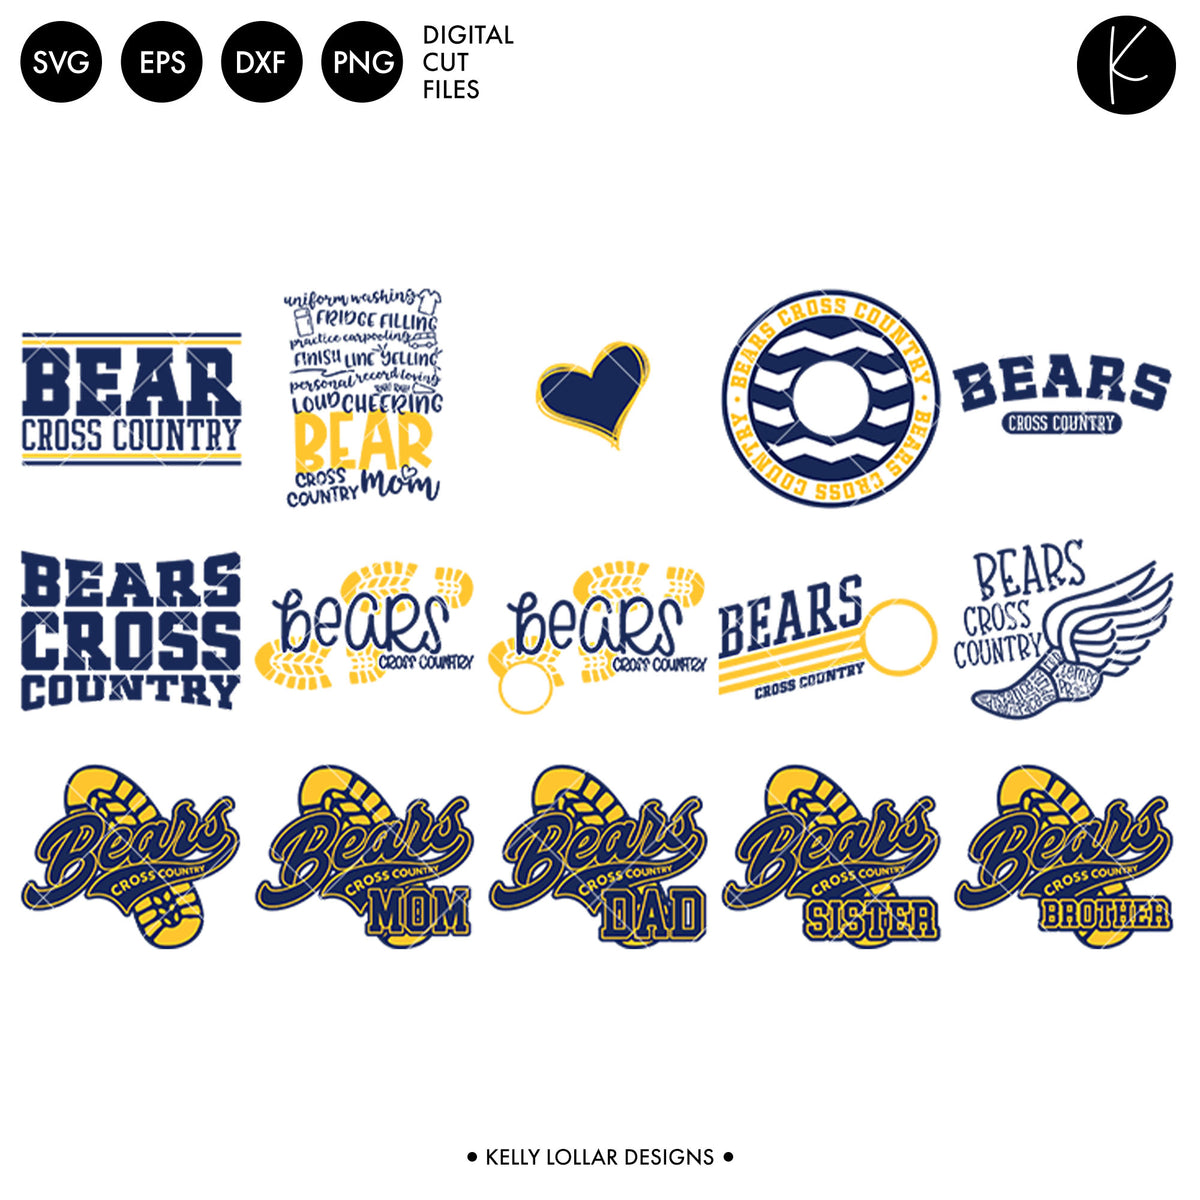 Bears Everything Spirit Bundle | SVG DXF EPS PNG Cut Files